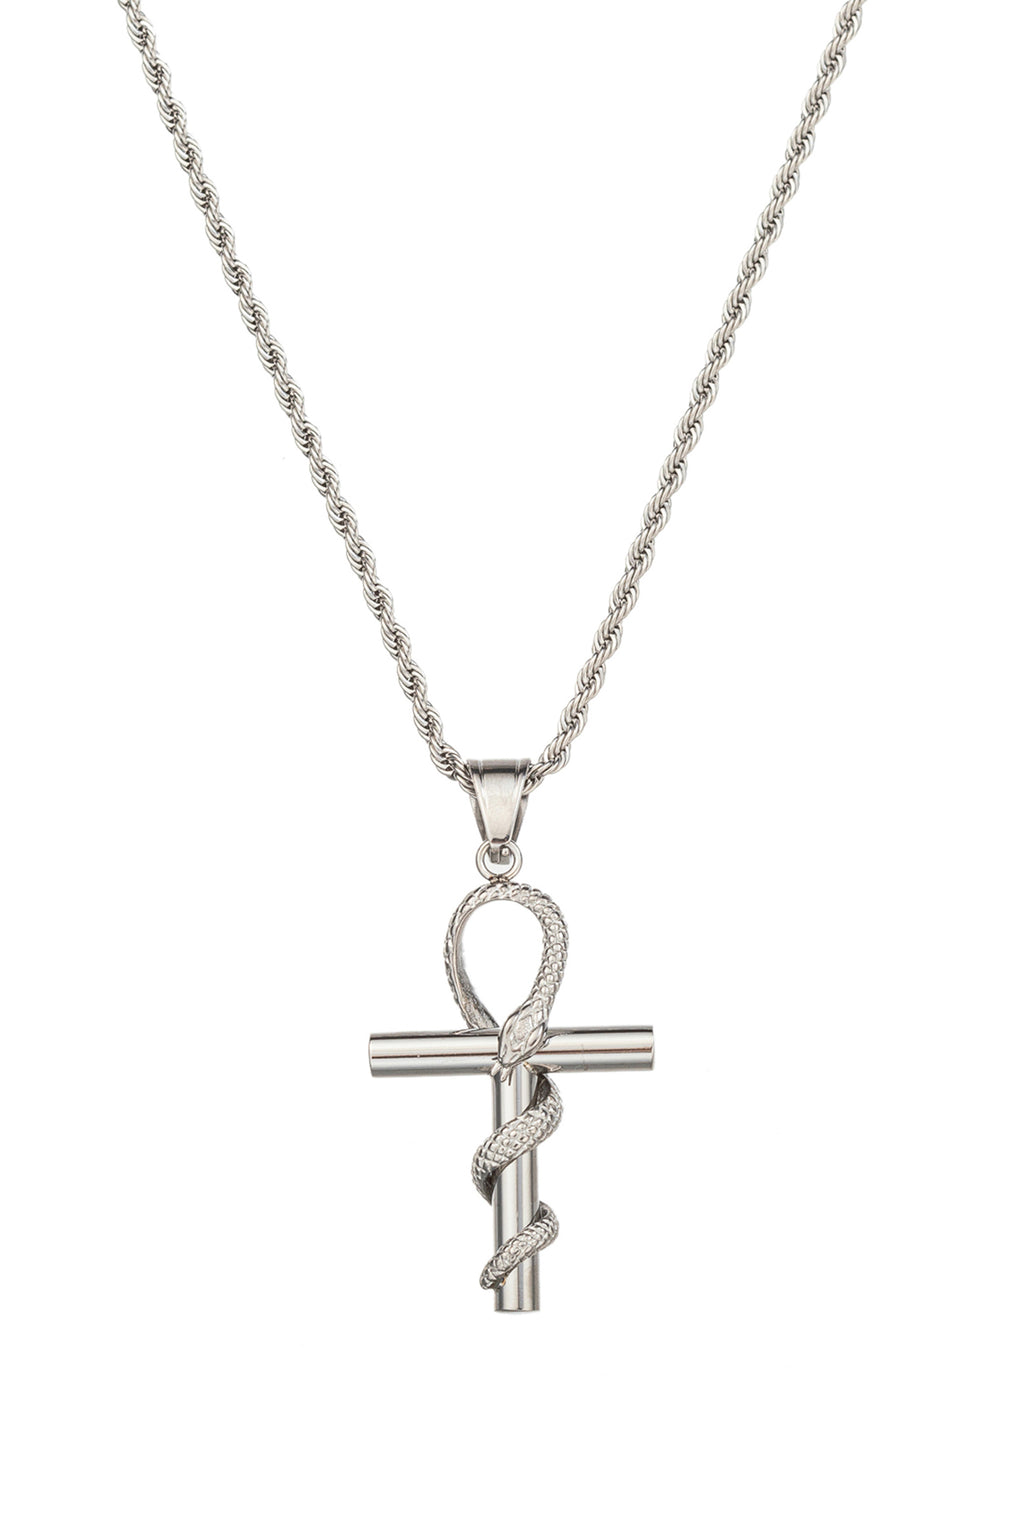 Silver tone titanium snake cross pendant necklace.